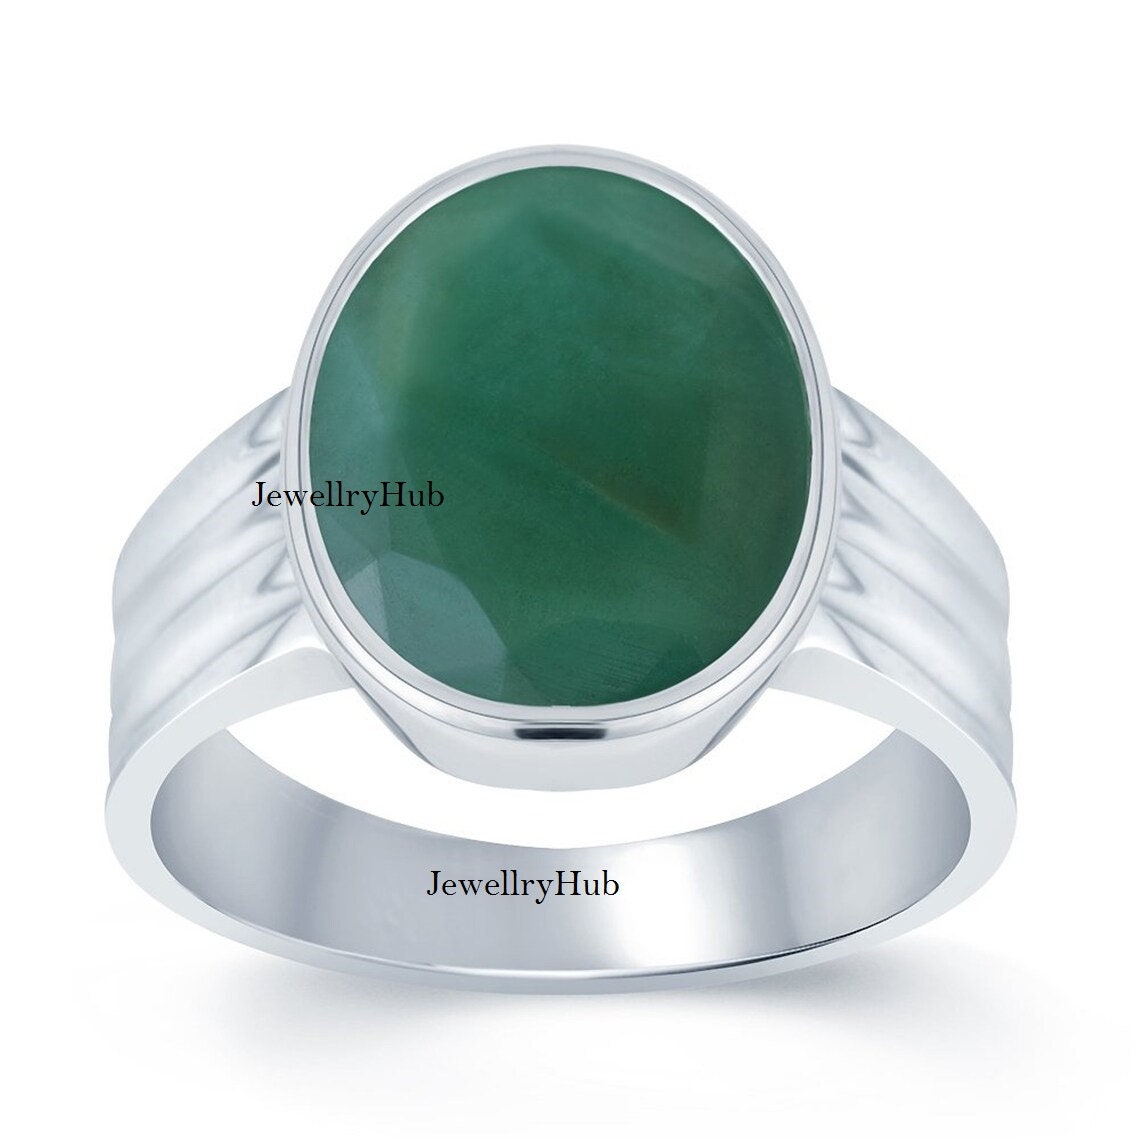 Buy Natural & Certified Emerald Panna Gemstone Rings – CLARA